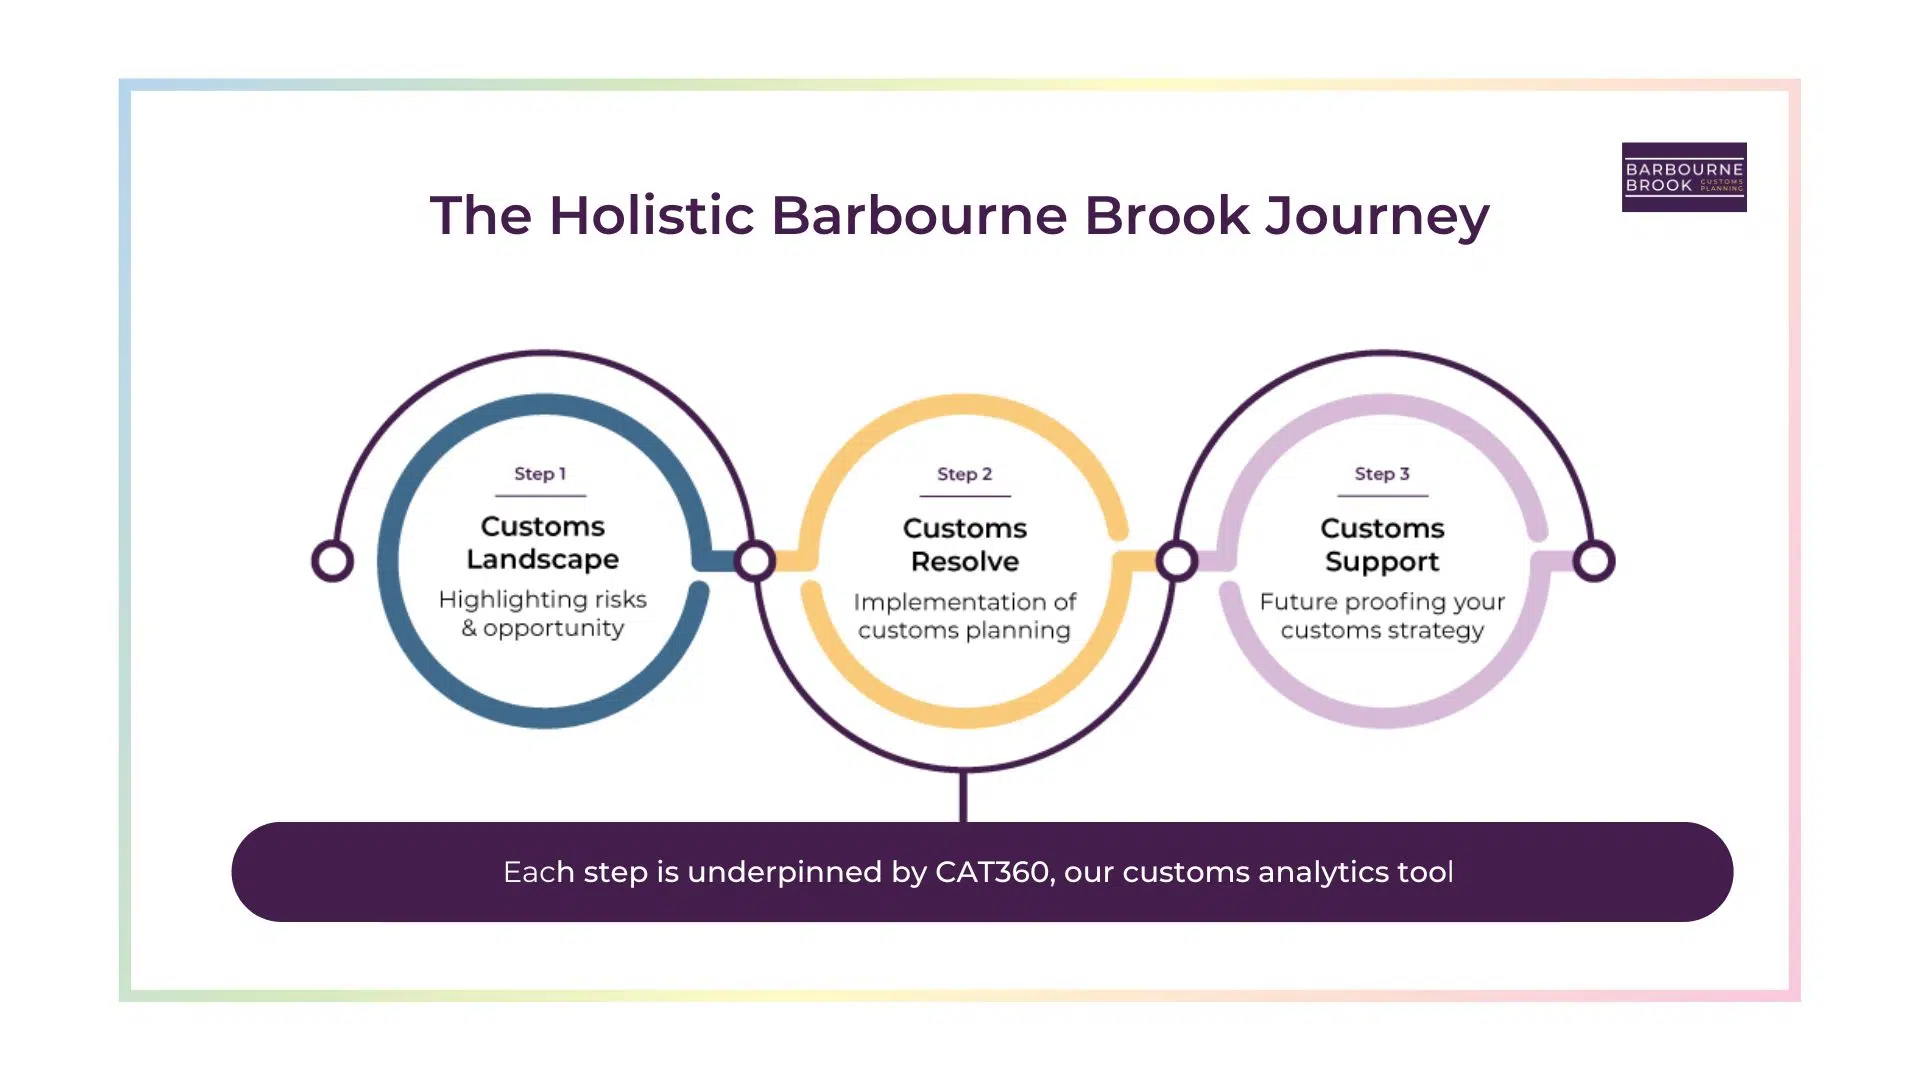 The Barbourne Brook Journey diagram image